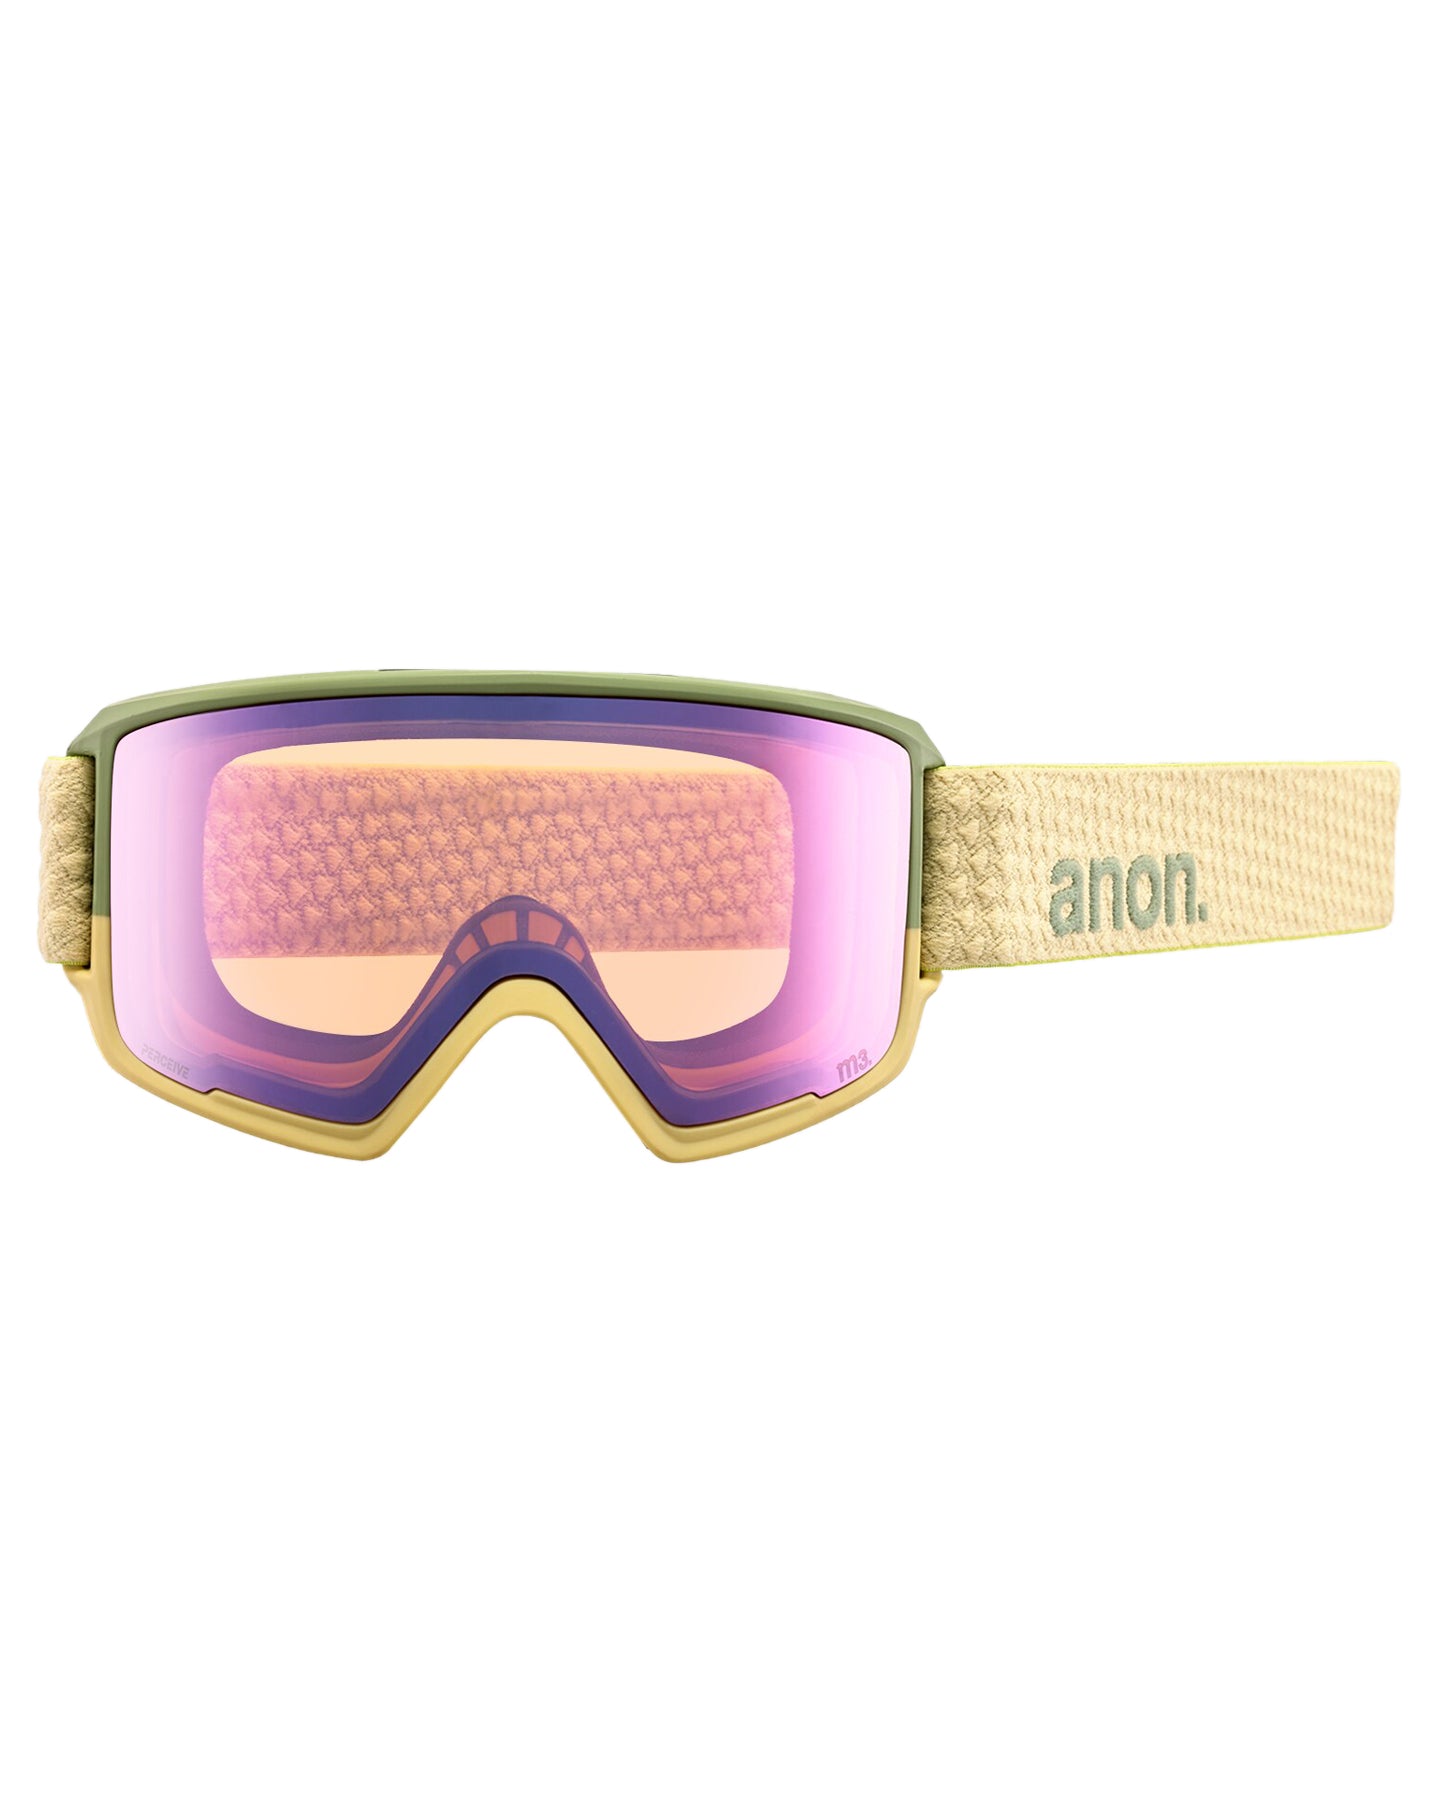 Anon M3 Snow Goggles + Bonus Lens + Mfi® Face Mask - Mushroom/Perceive Variable Green Lens Men's Snow Goggles - Trojan Wake Ski Snow